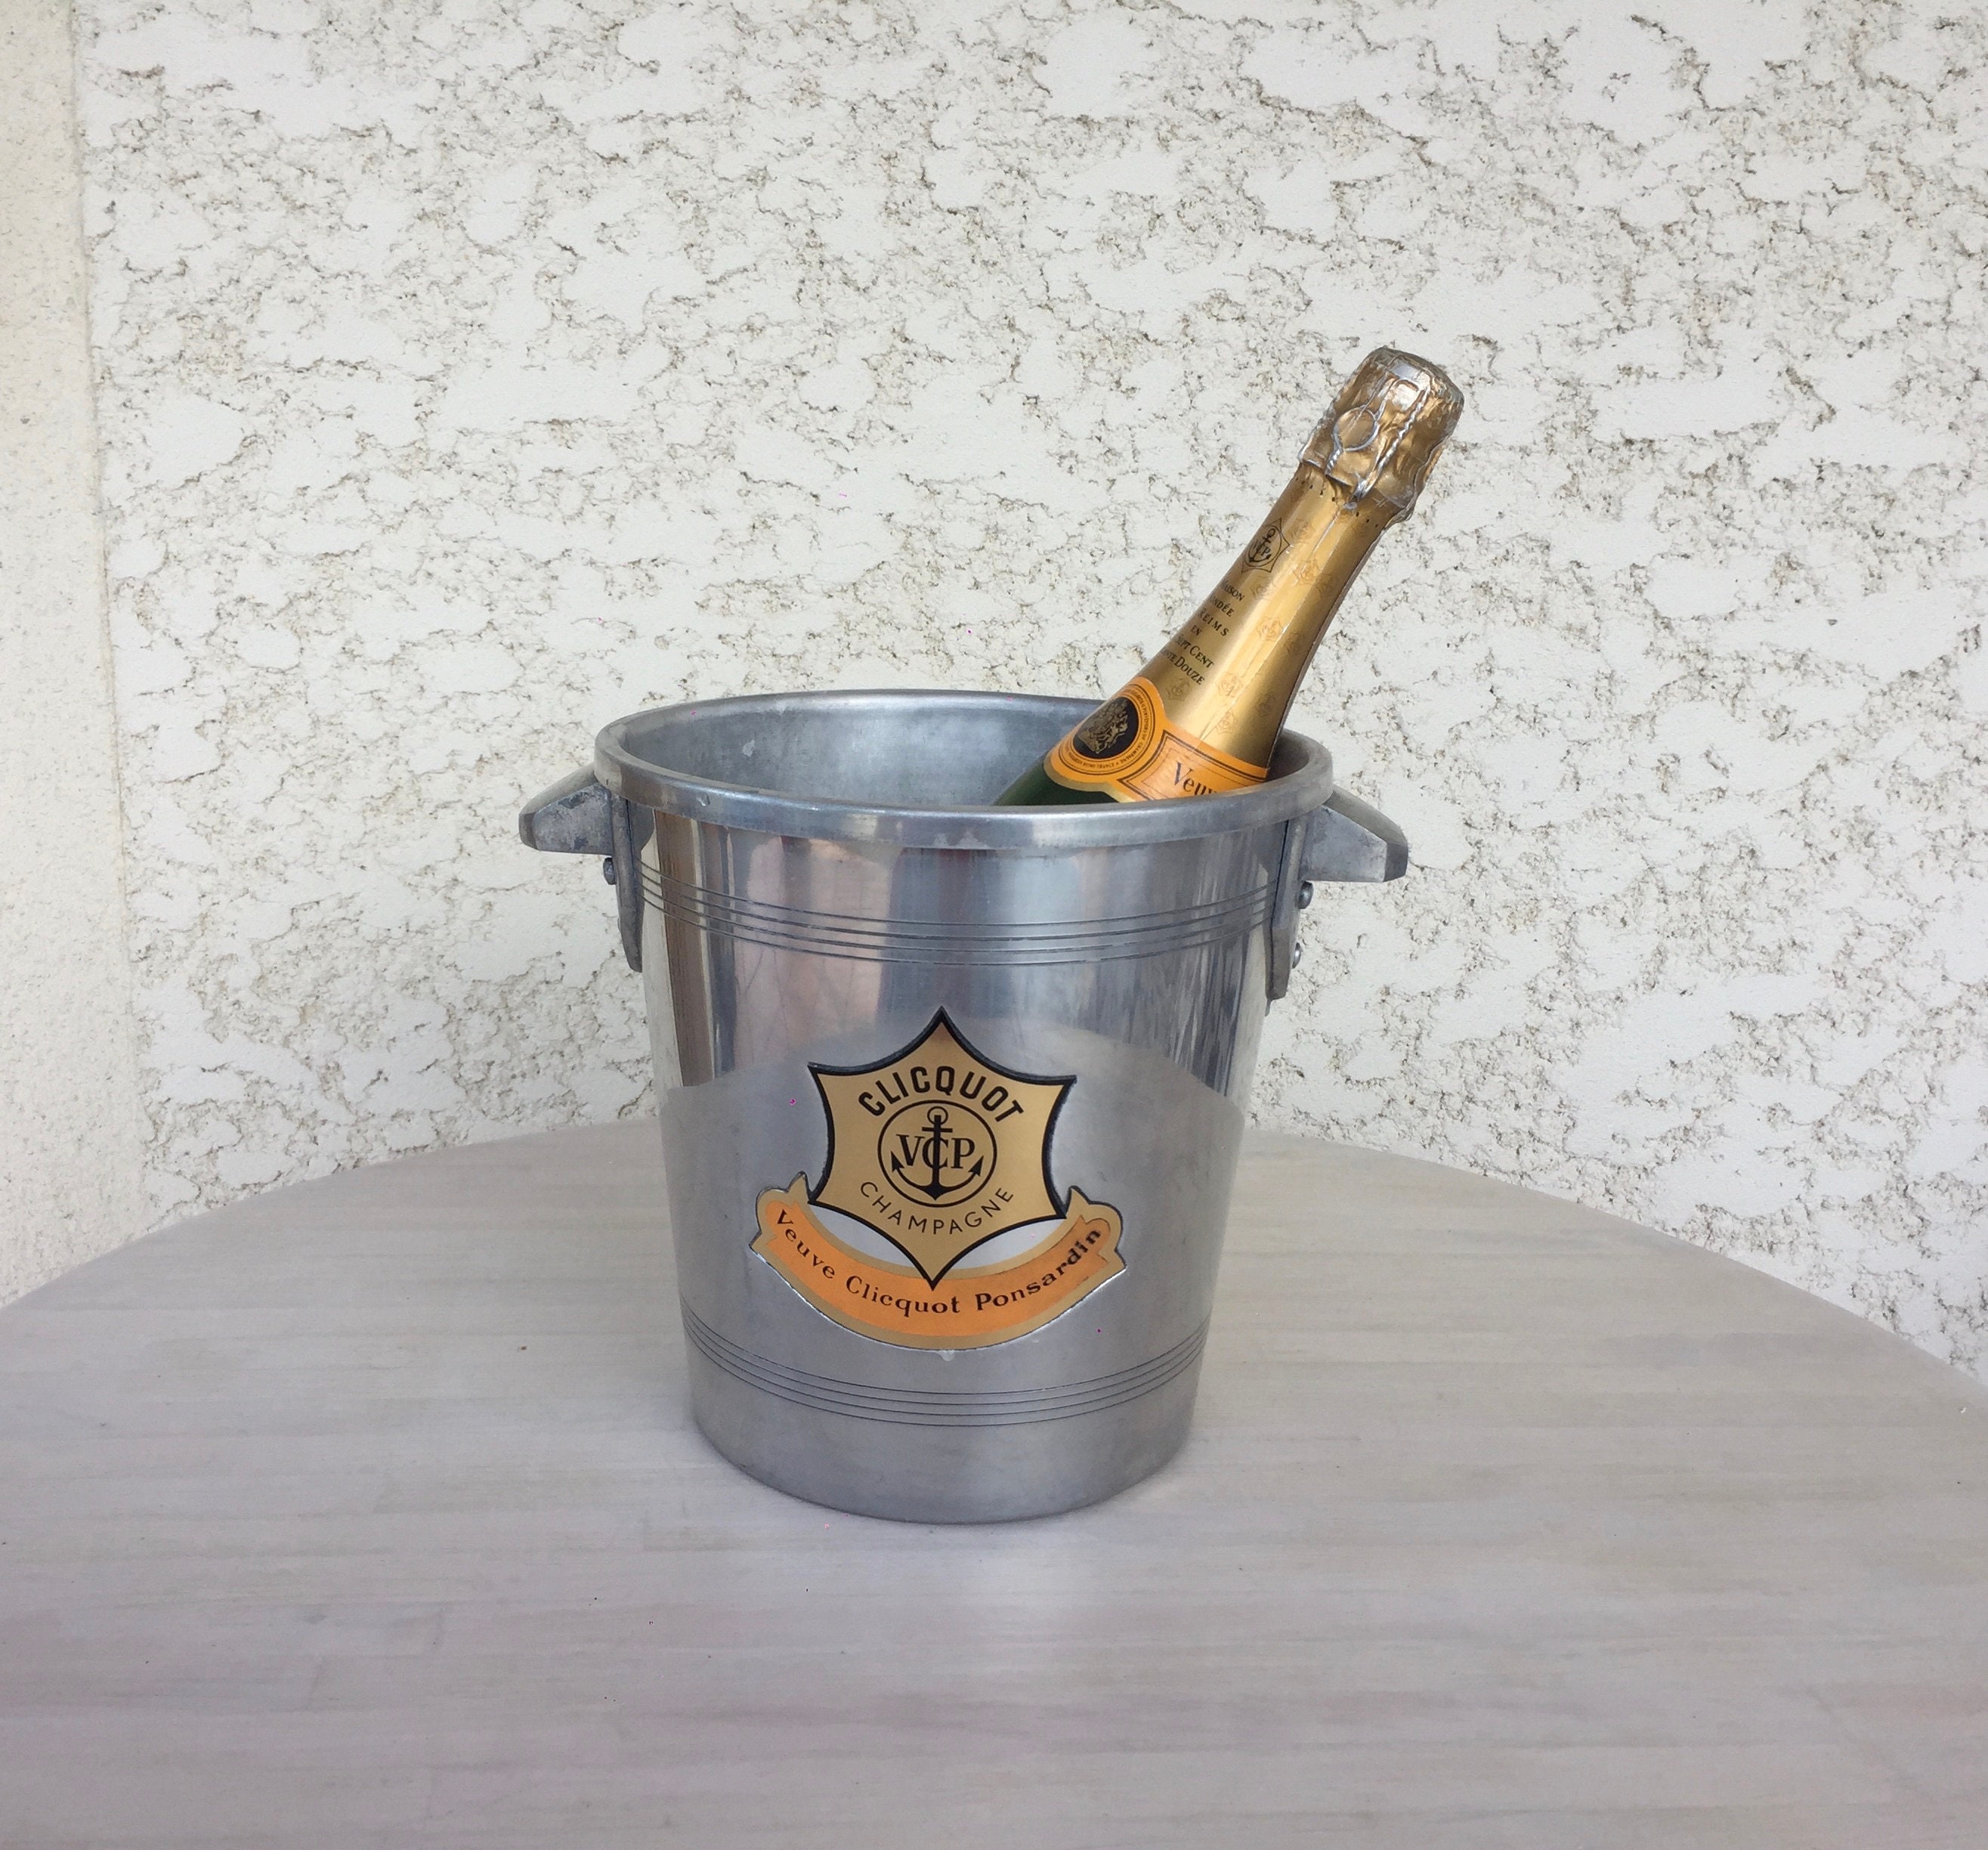 Veuve Clicquot Stainless Steel Cooler Champagne Bottle Cooler Ice Bucket  Prestige Vasque (Brushed)